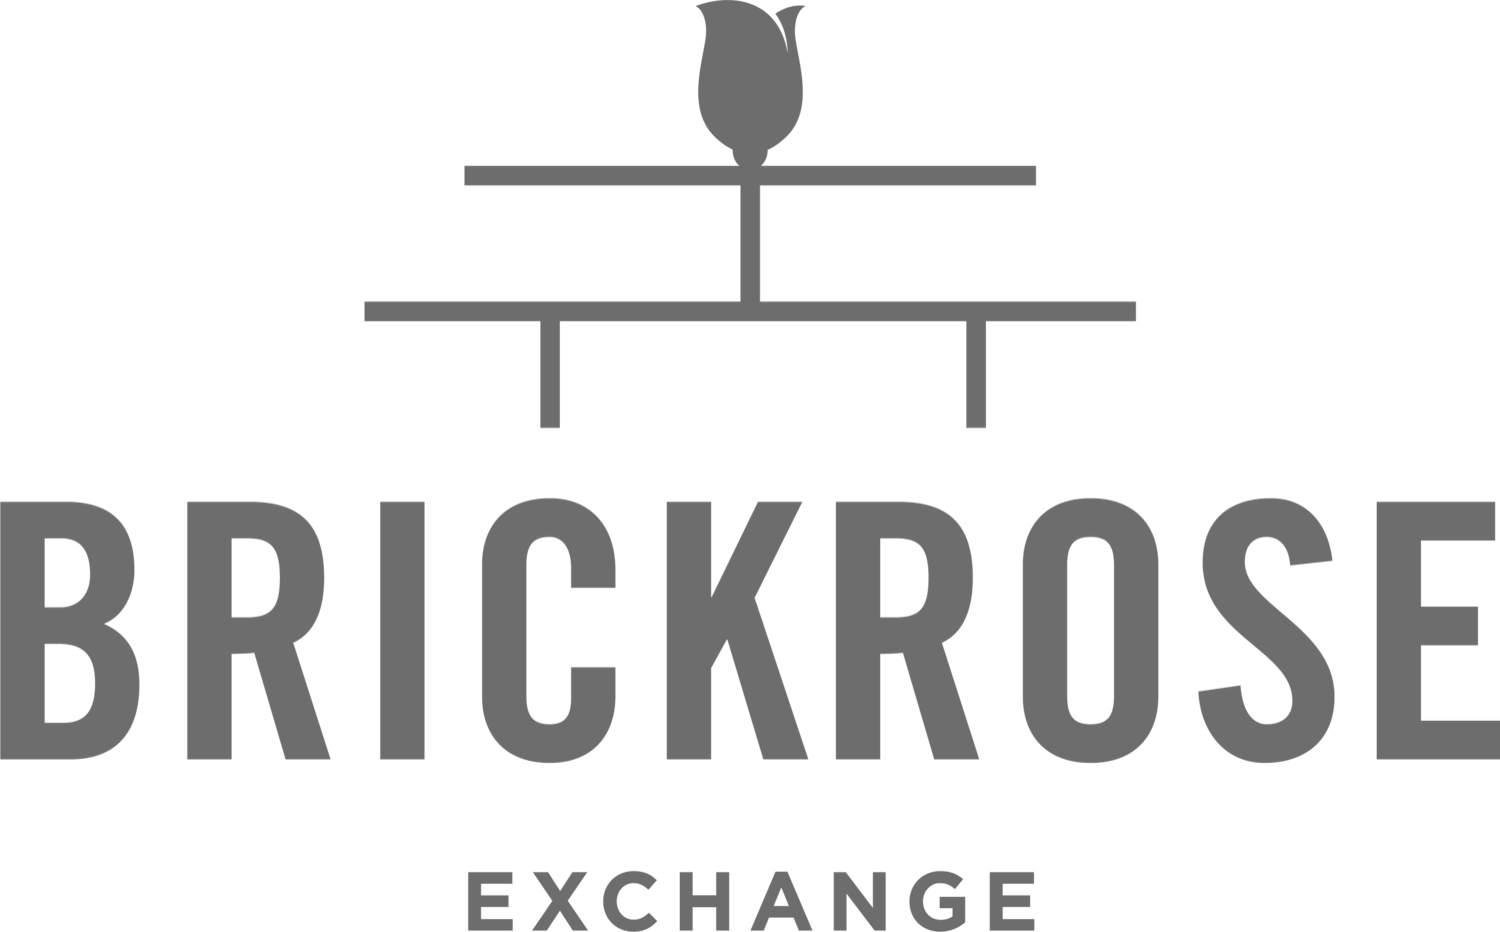 Brickrose logo